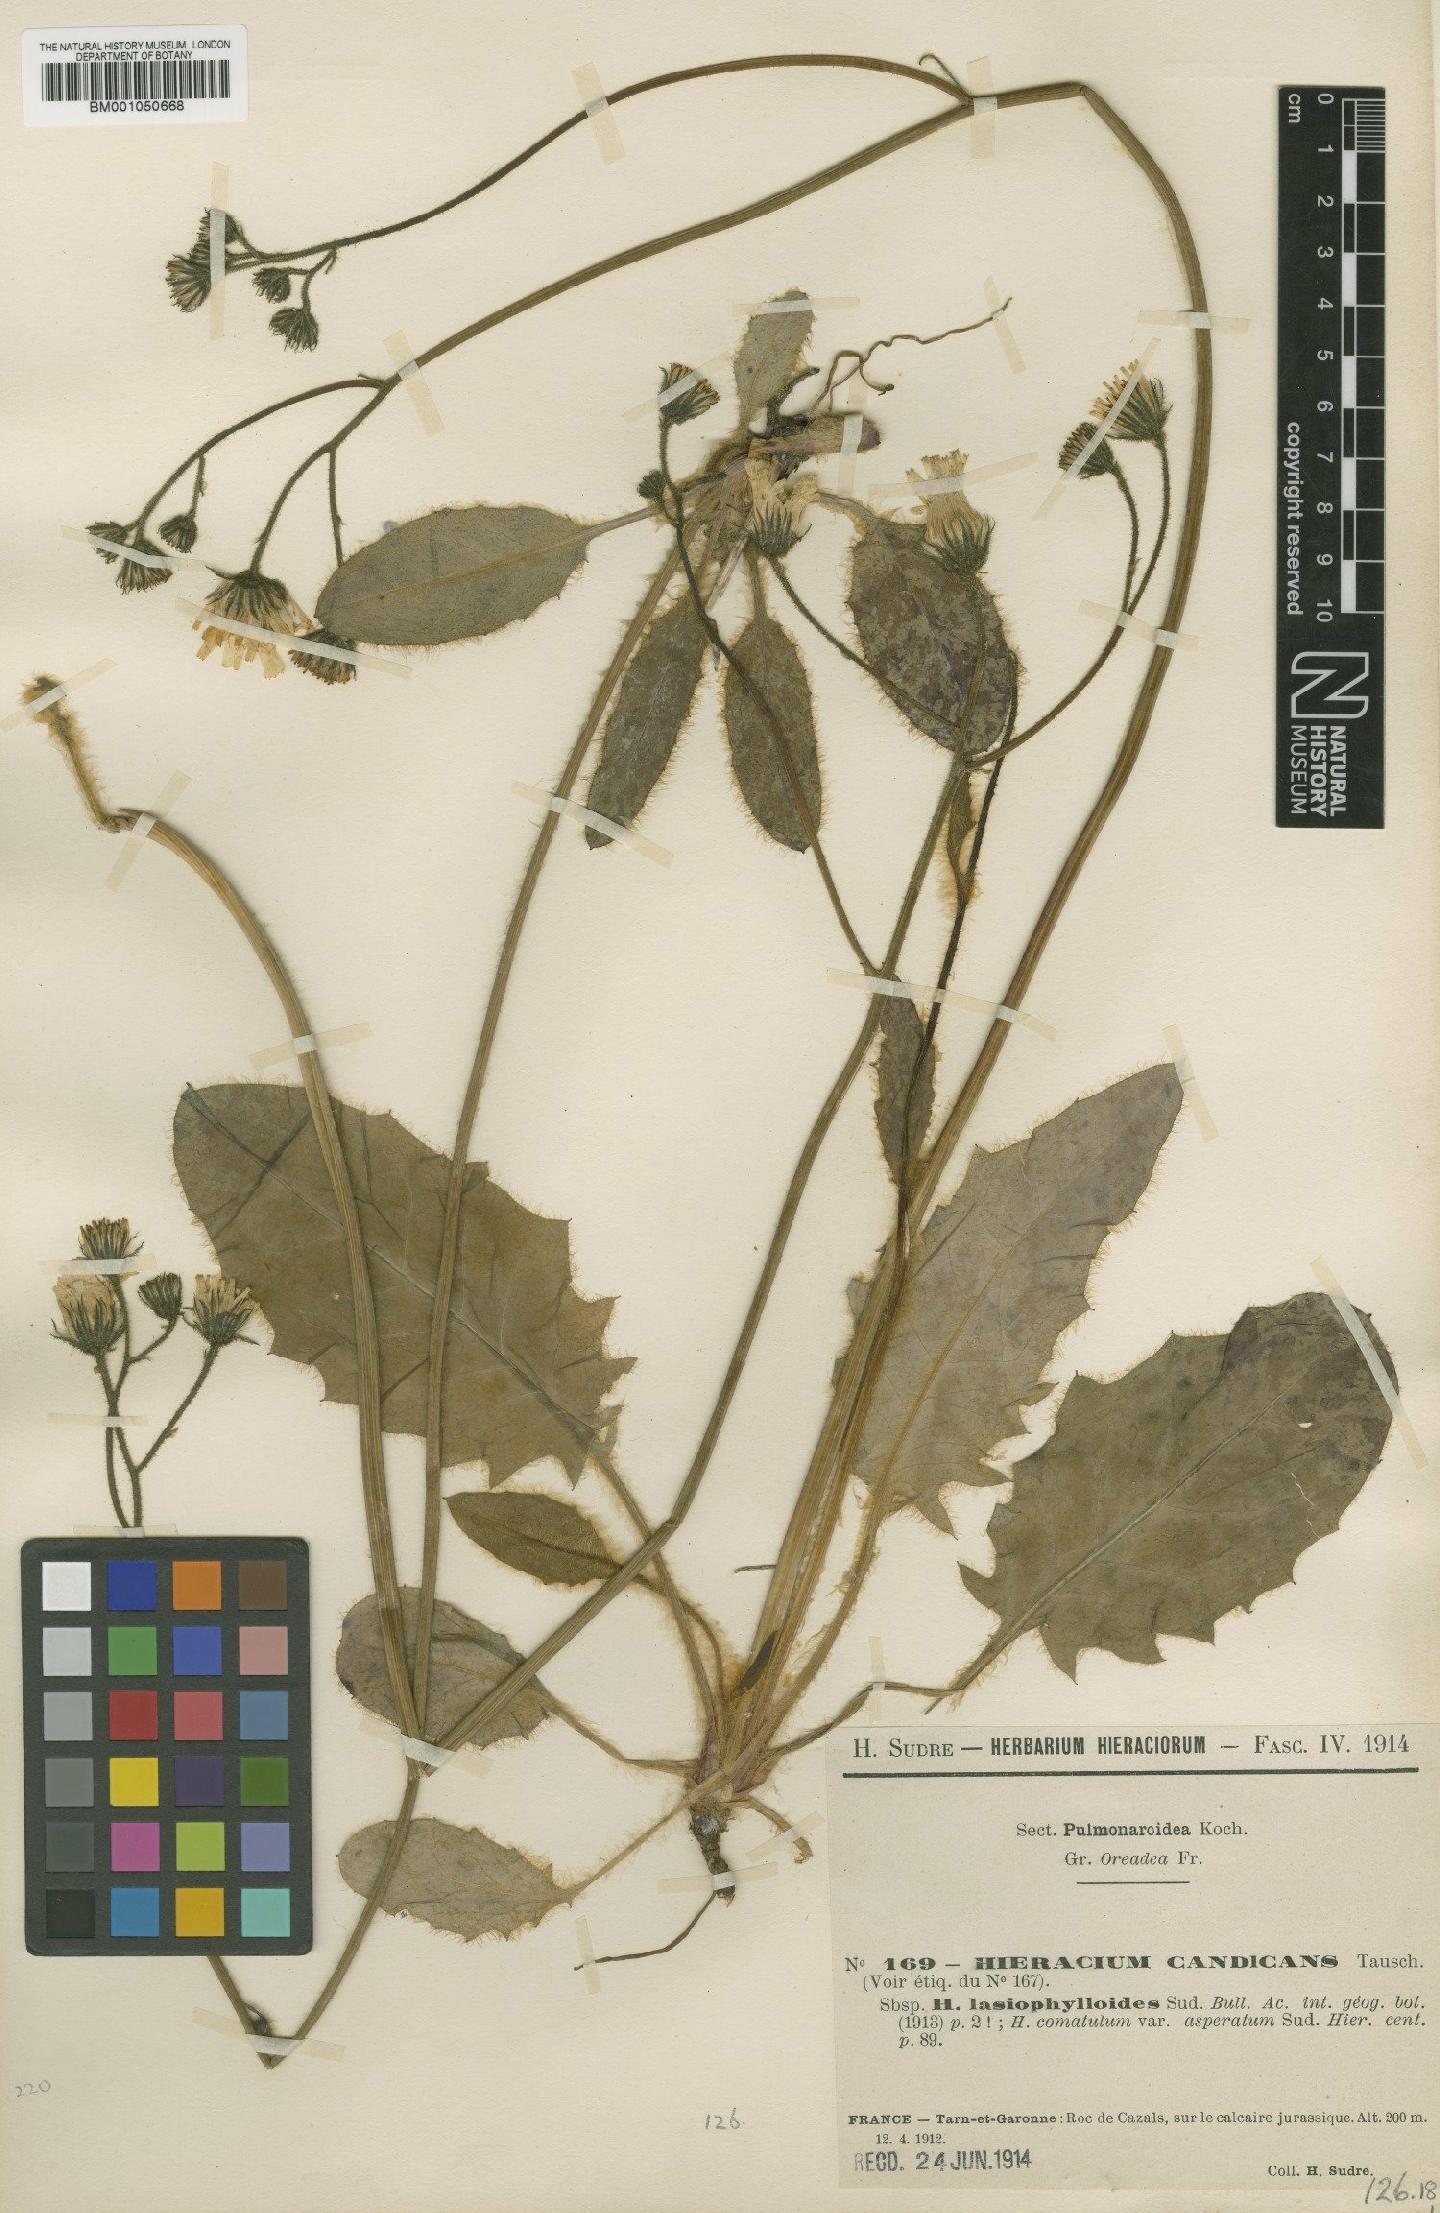 To NHMUK collection (Hieracium pallidum subsp. candicans (Tausch) Zahn; TYPE; NHMUK:ecatalogue:2398000)